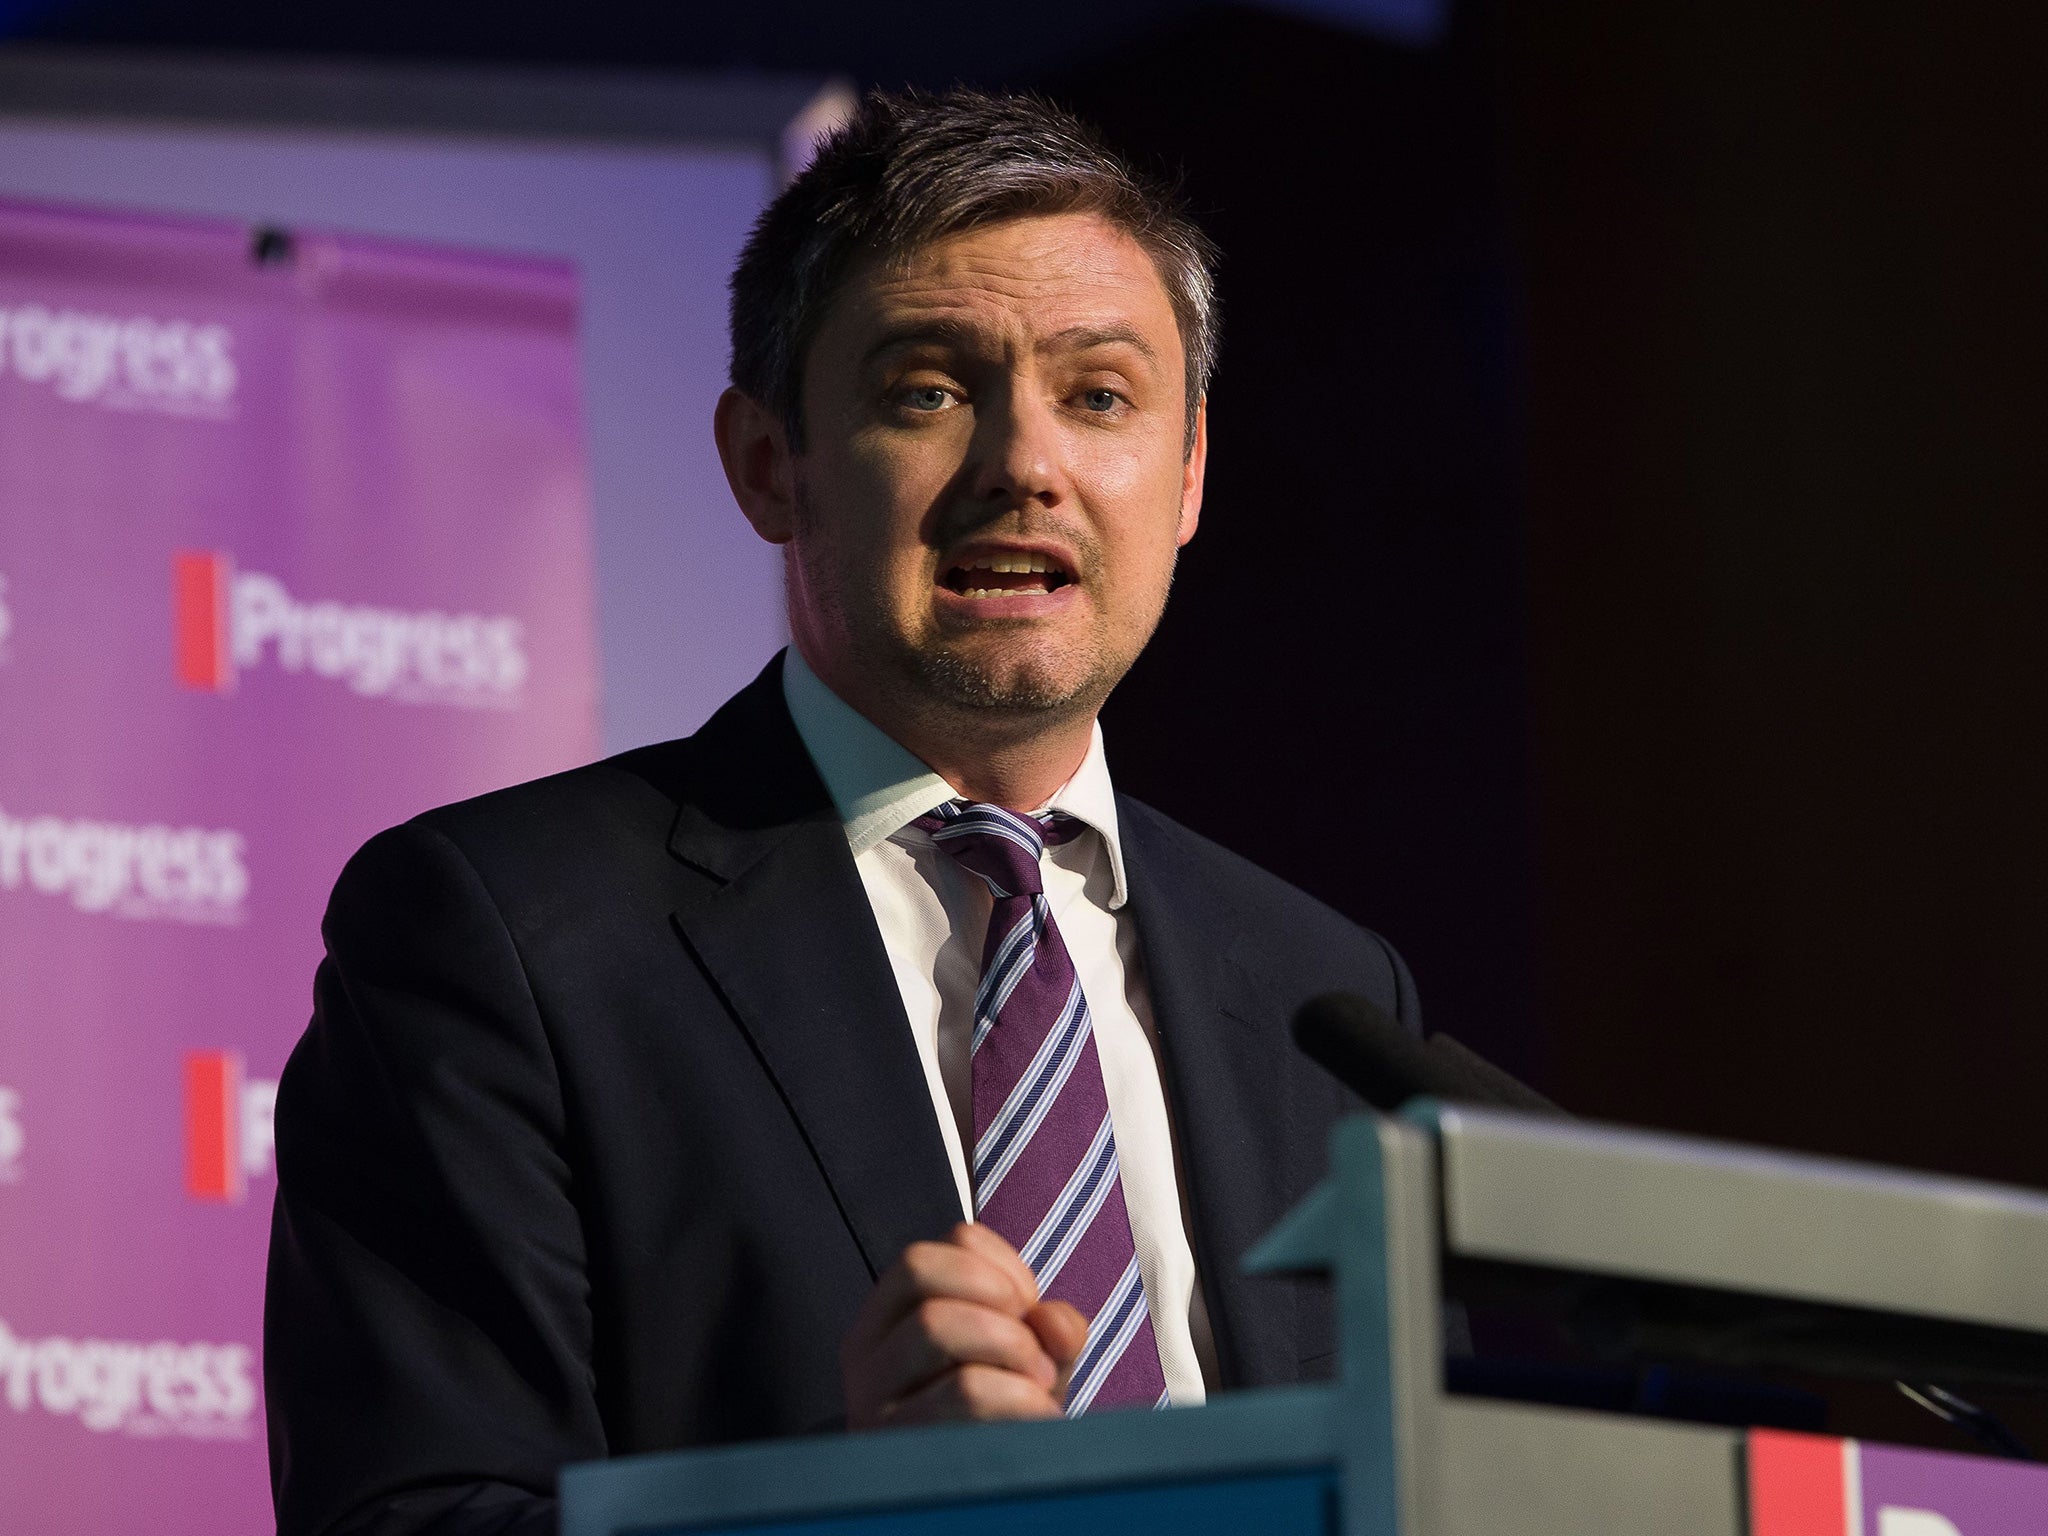 Barrow and Furness’s MP John Woodcock criticised the estimate